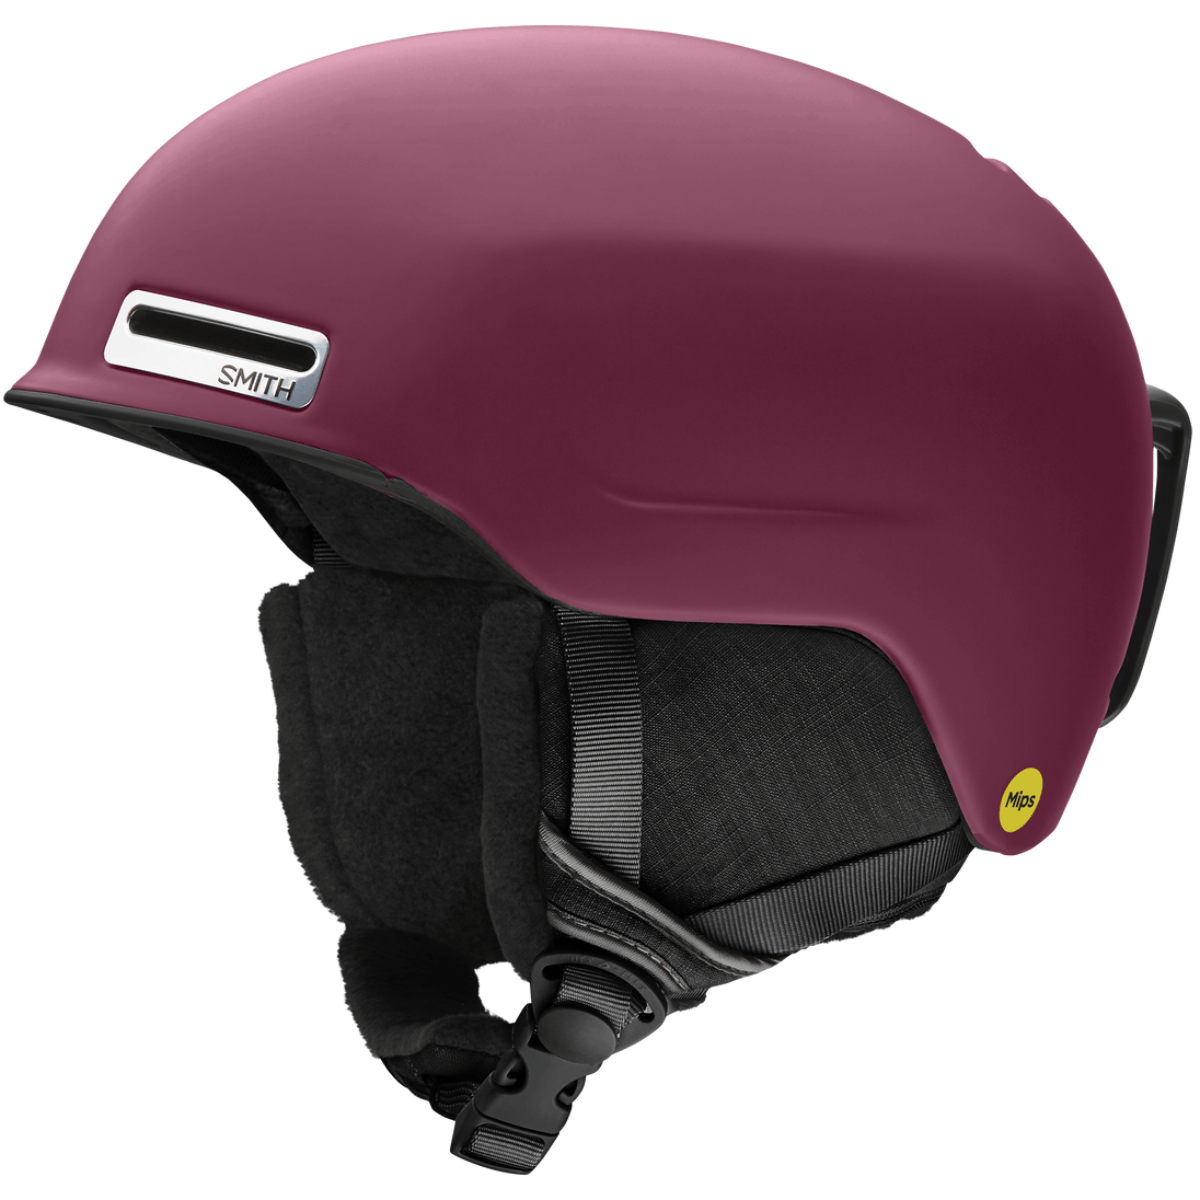 Smith Optics Allure MIPS Helmet - Women's - Bobwards.com